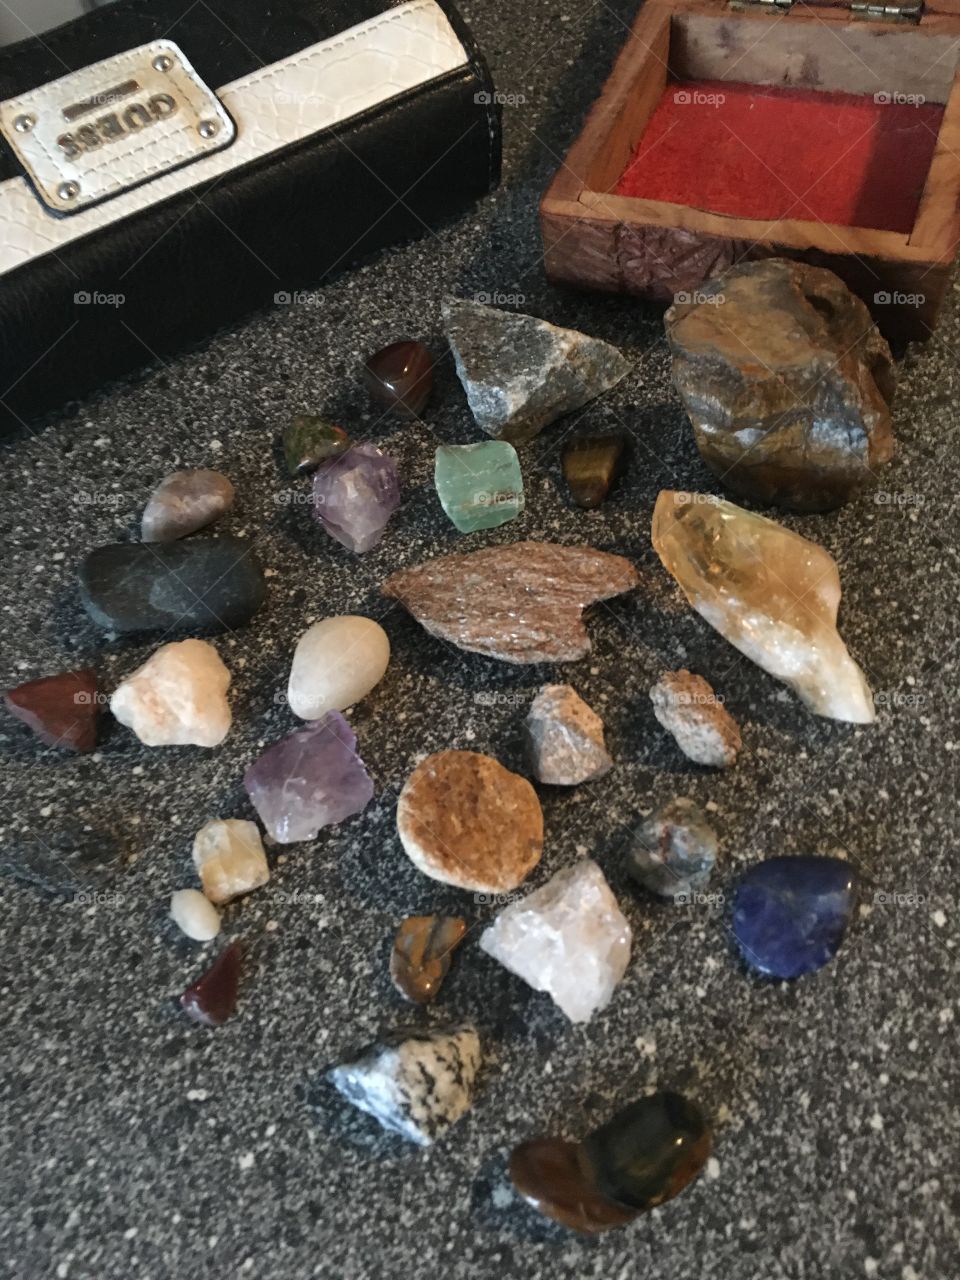 I collect rocks